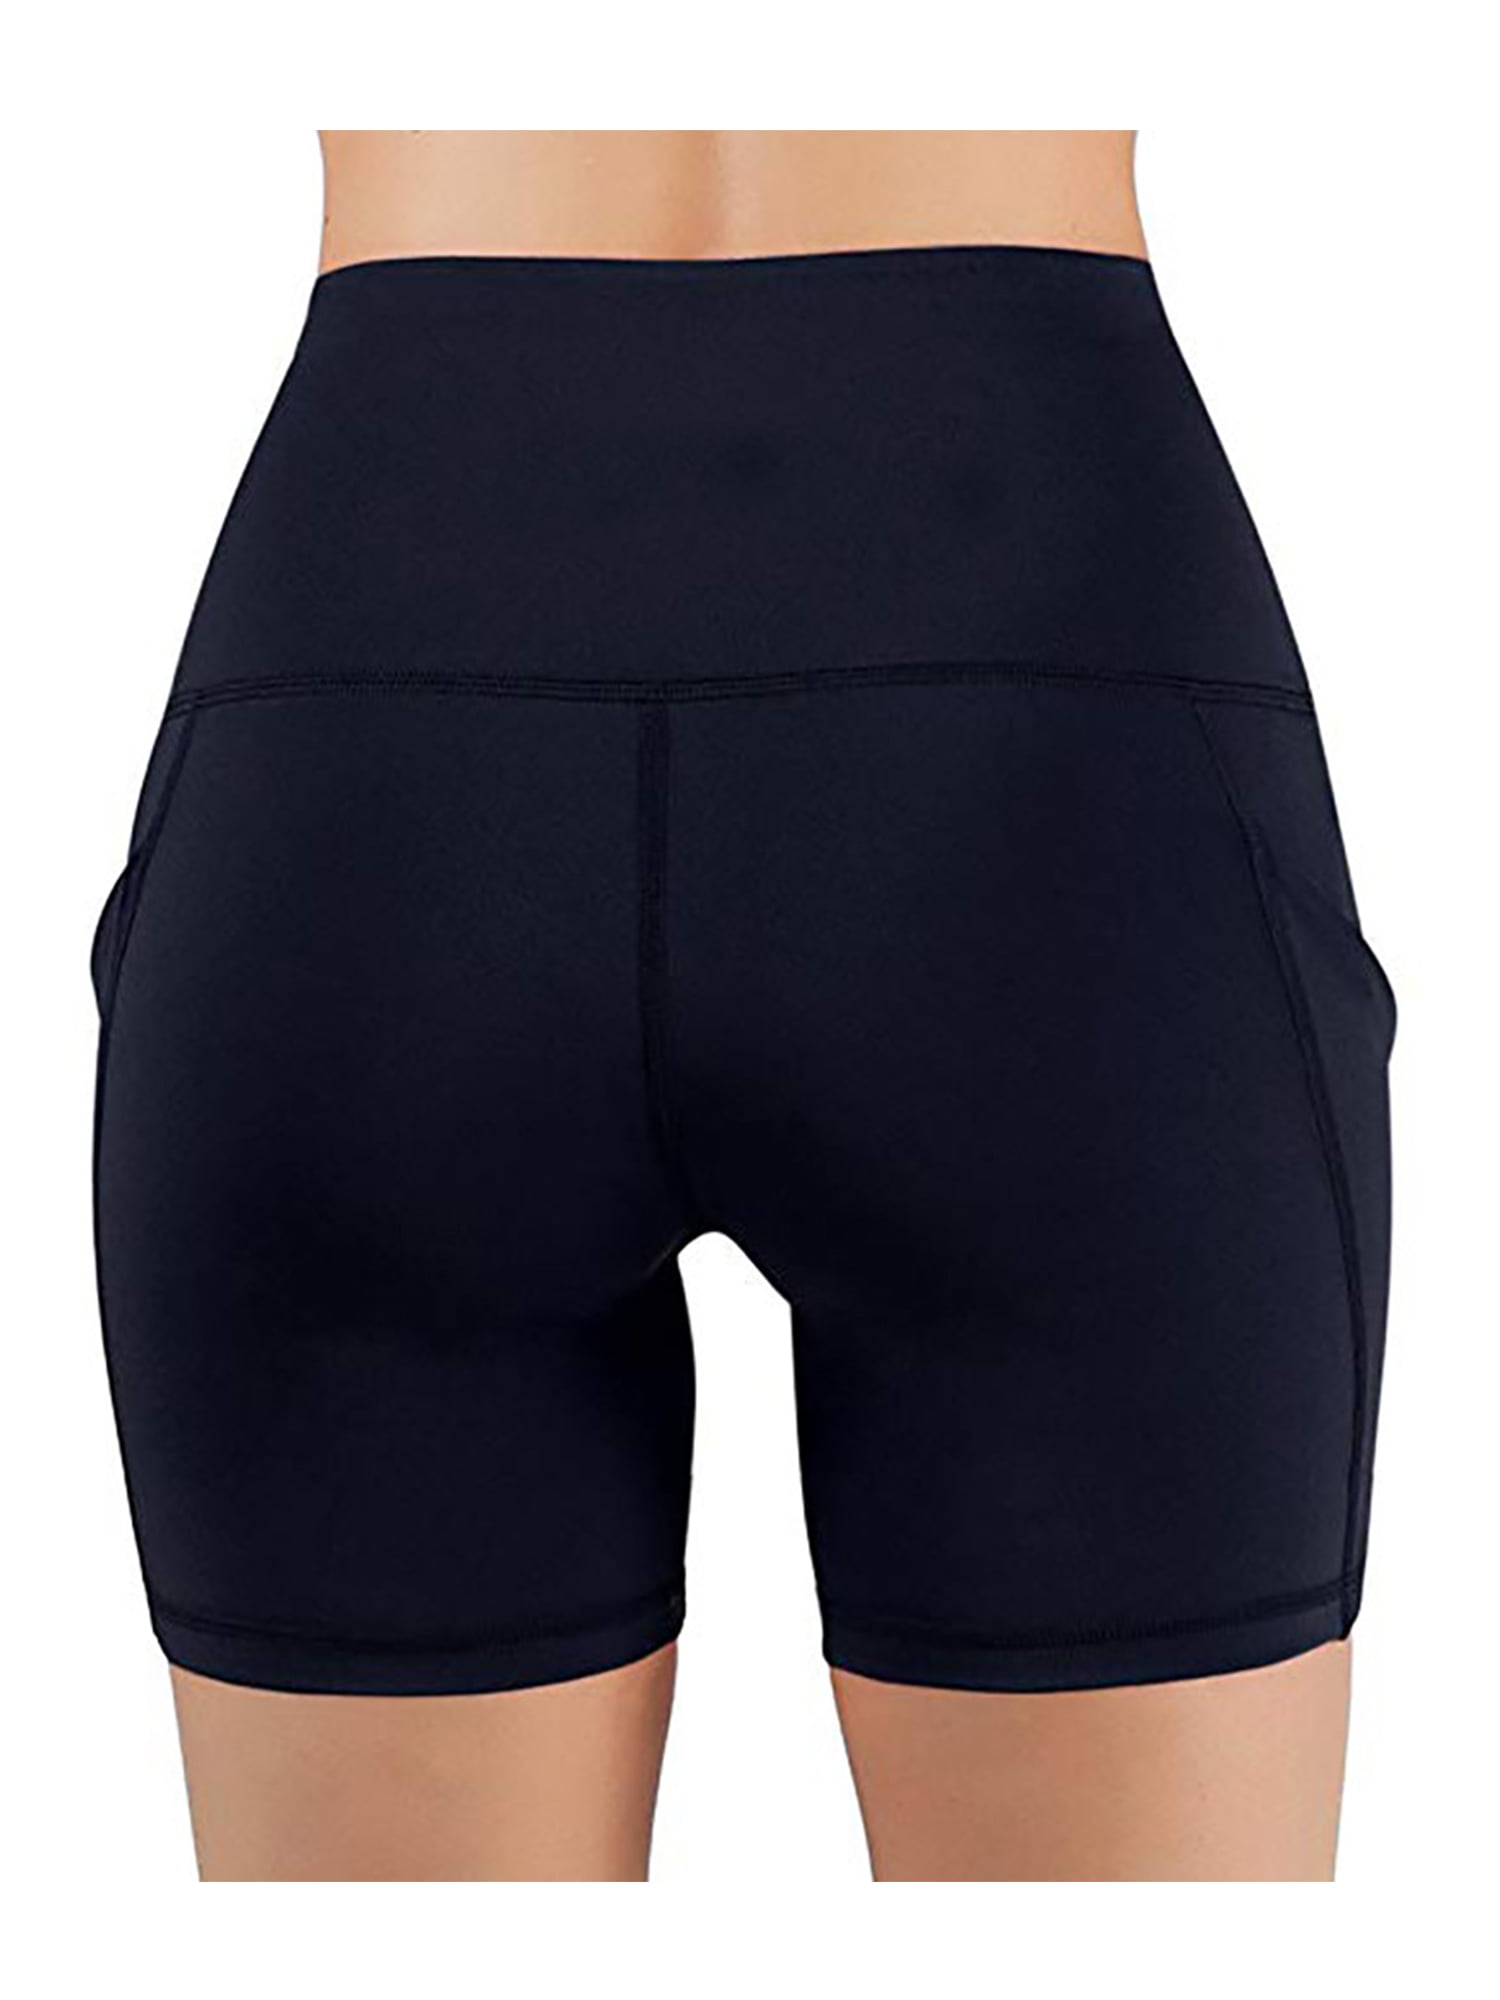 Women's Yoga Shorts Two Tone Gym Sports Pants Fitness Workout 95% Cotton S M L 